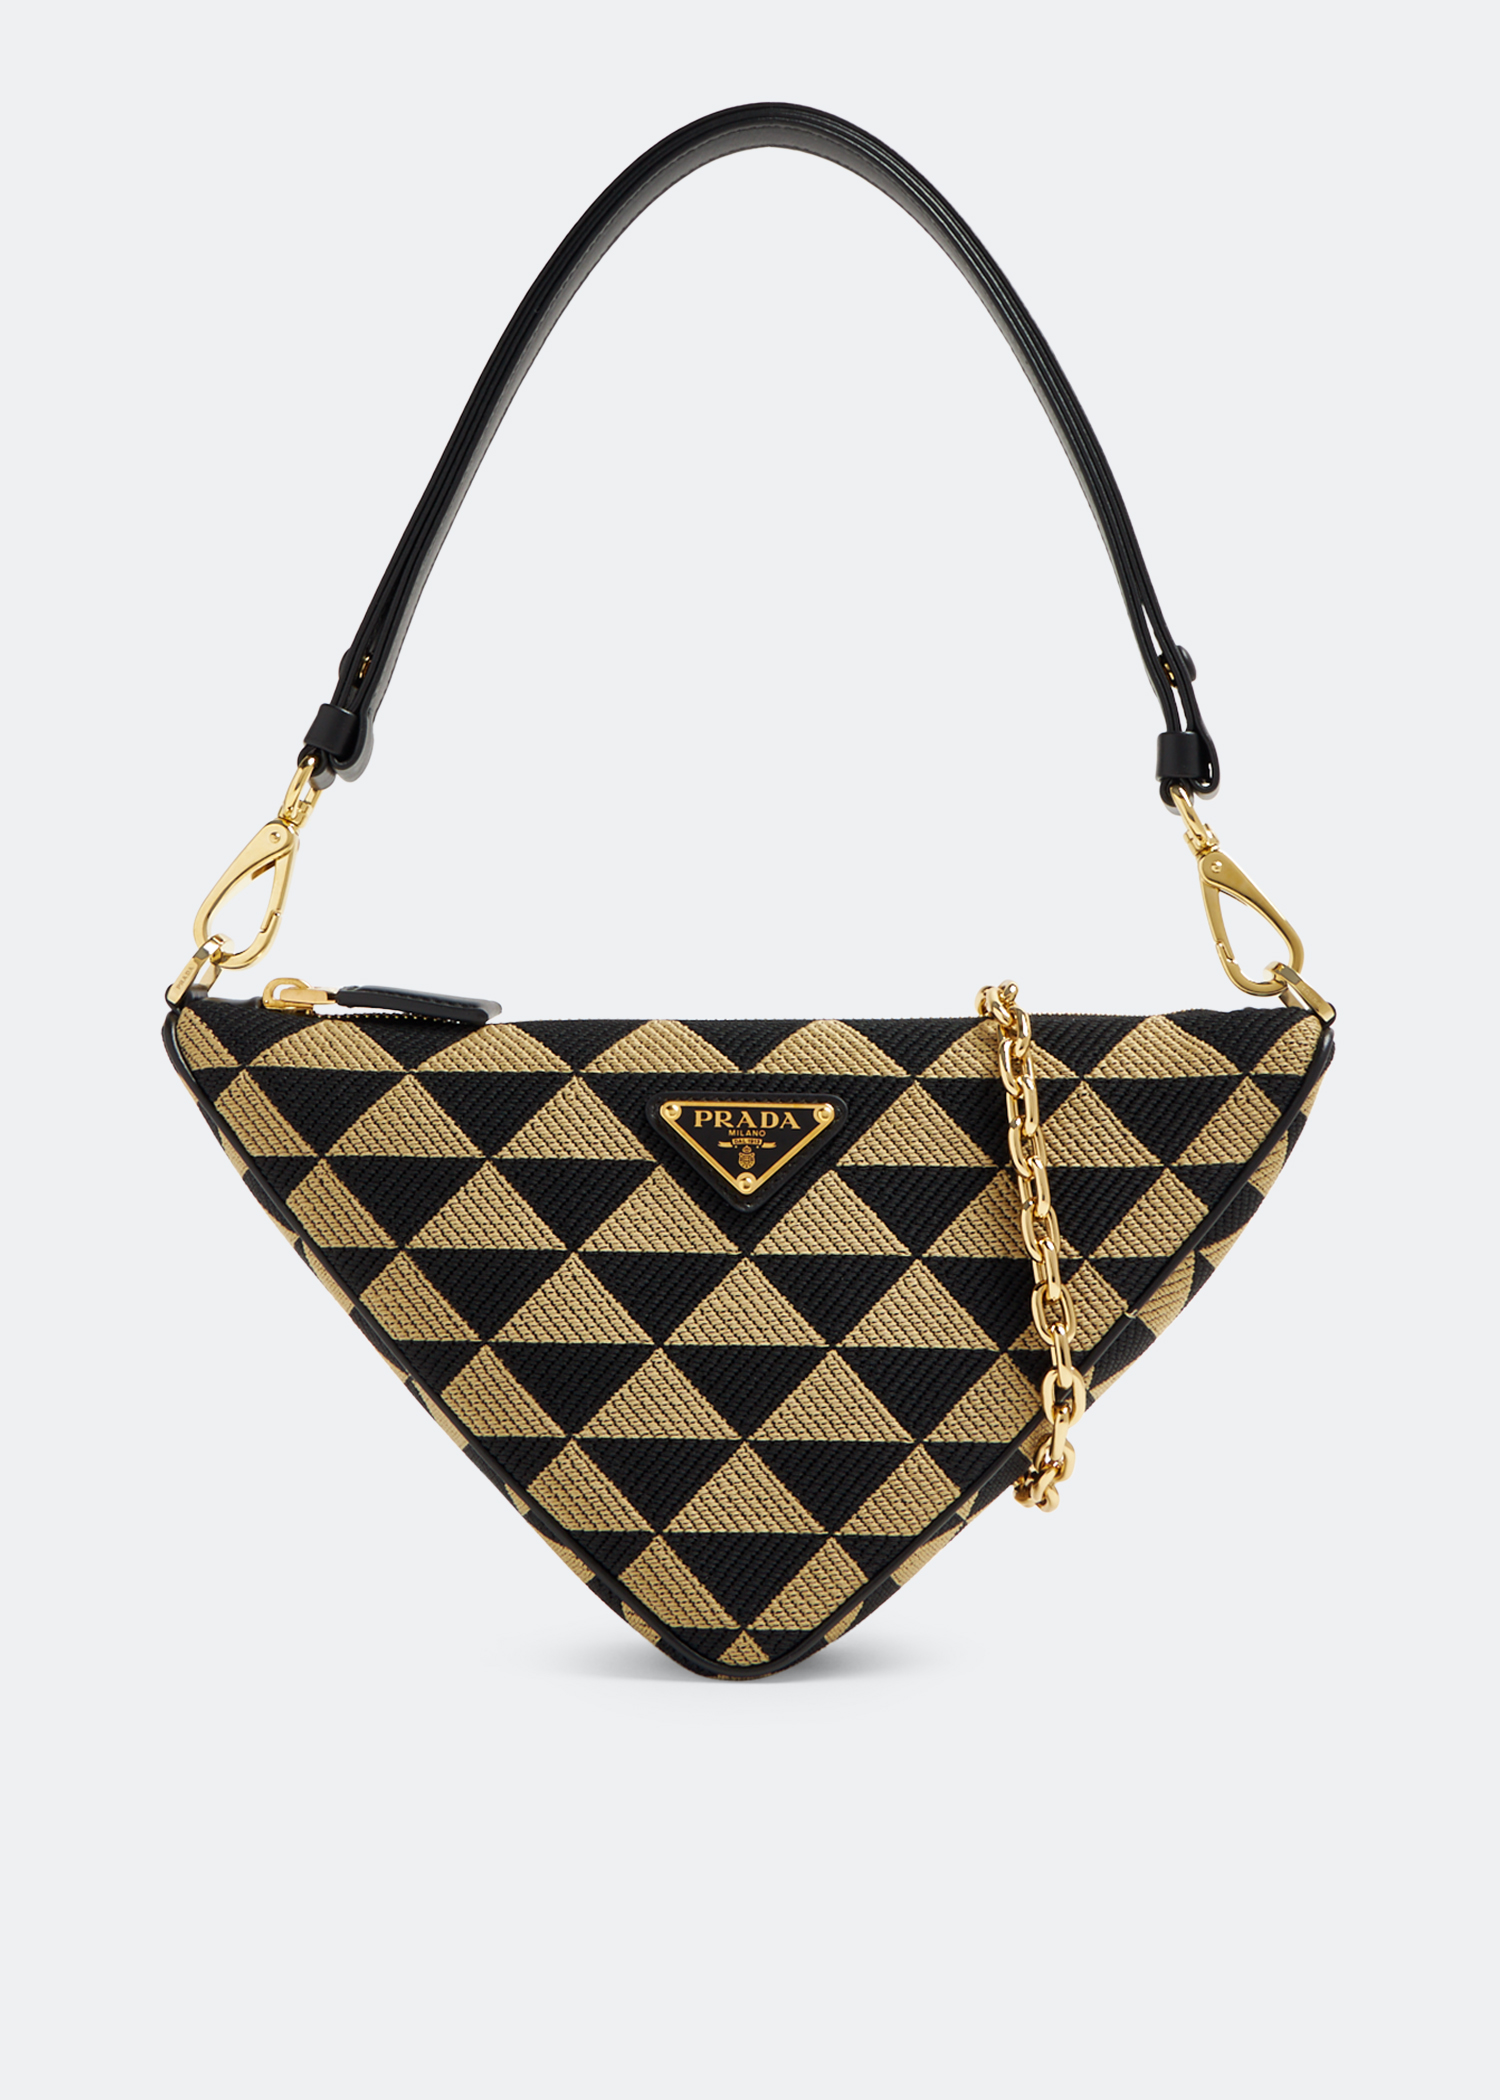 Prada Triangle Crochet Shoulder Bag in Metallic